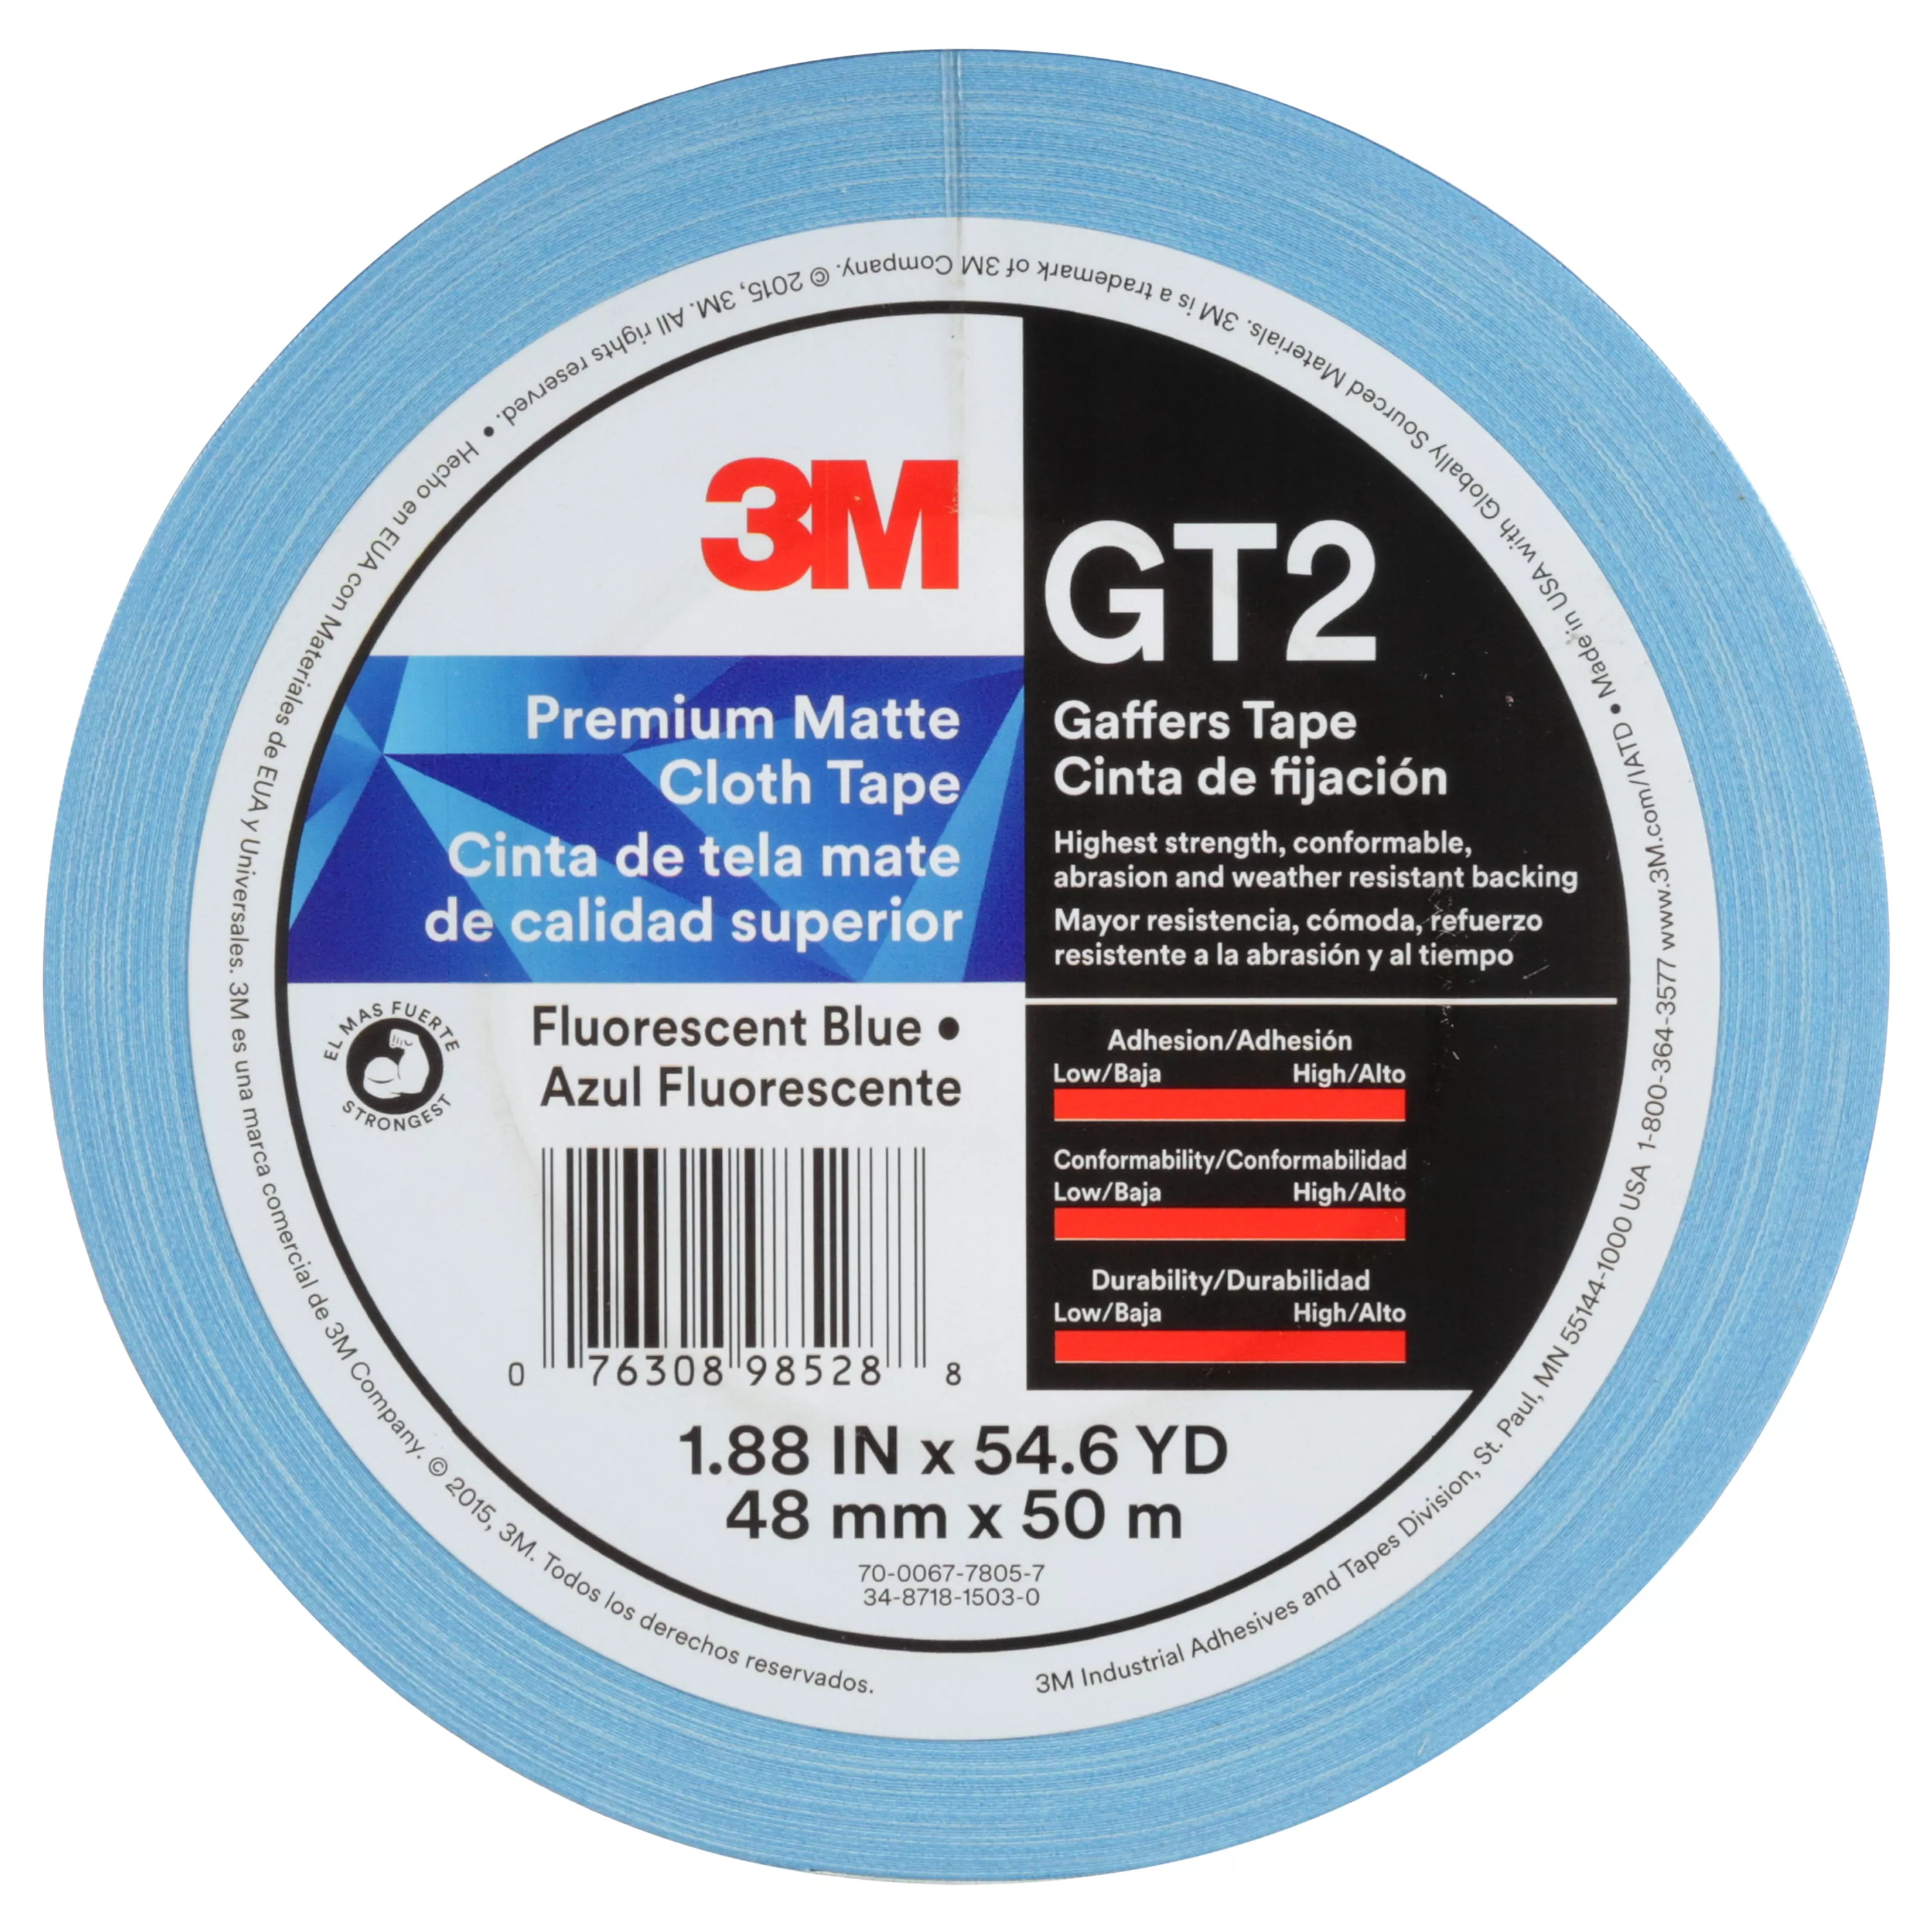 UPC 00076308985288 | 3M™ Premium Matte Cloth (Gaffers) Tape GT2